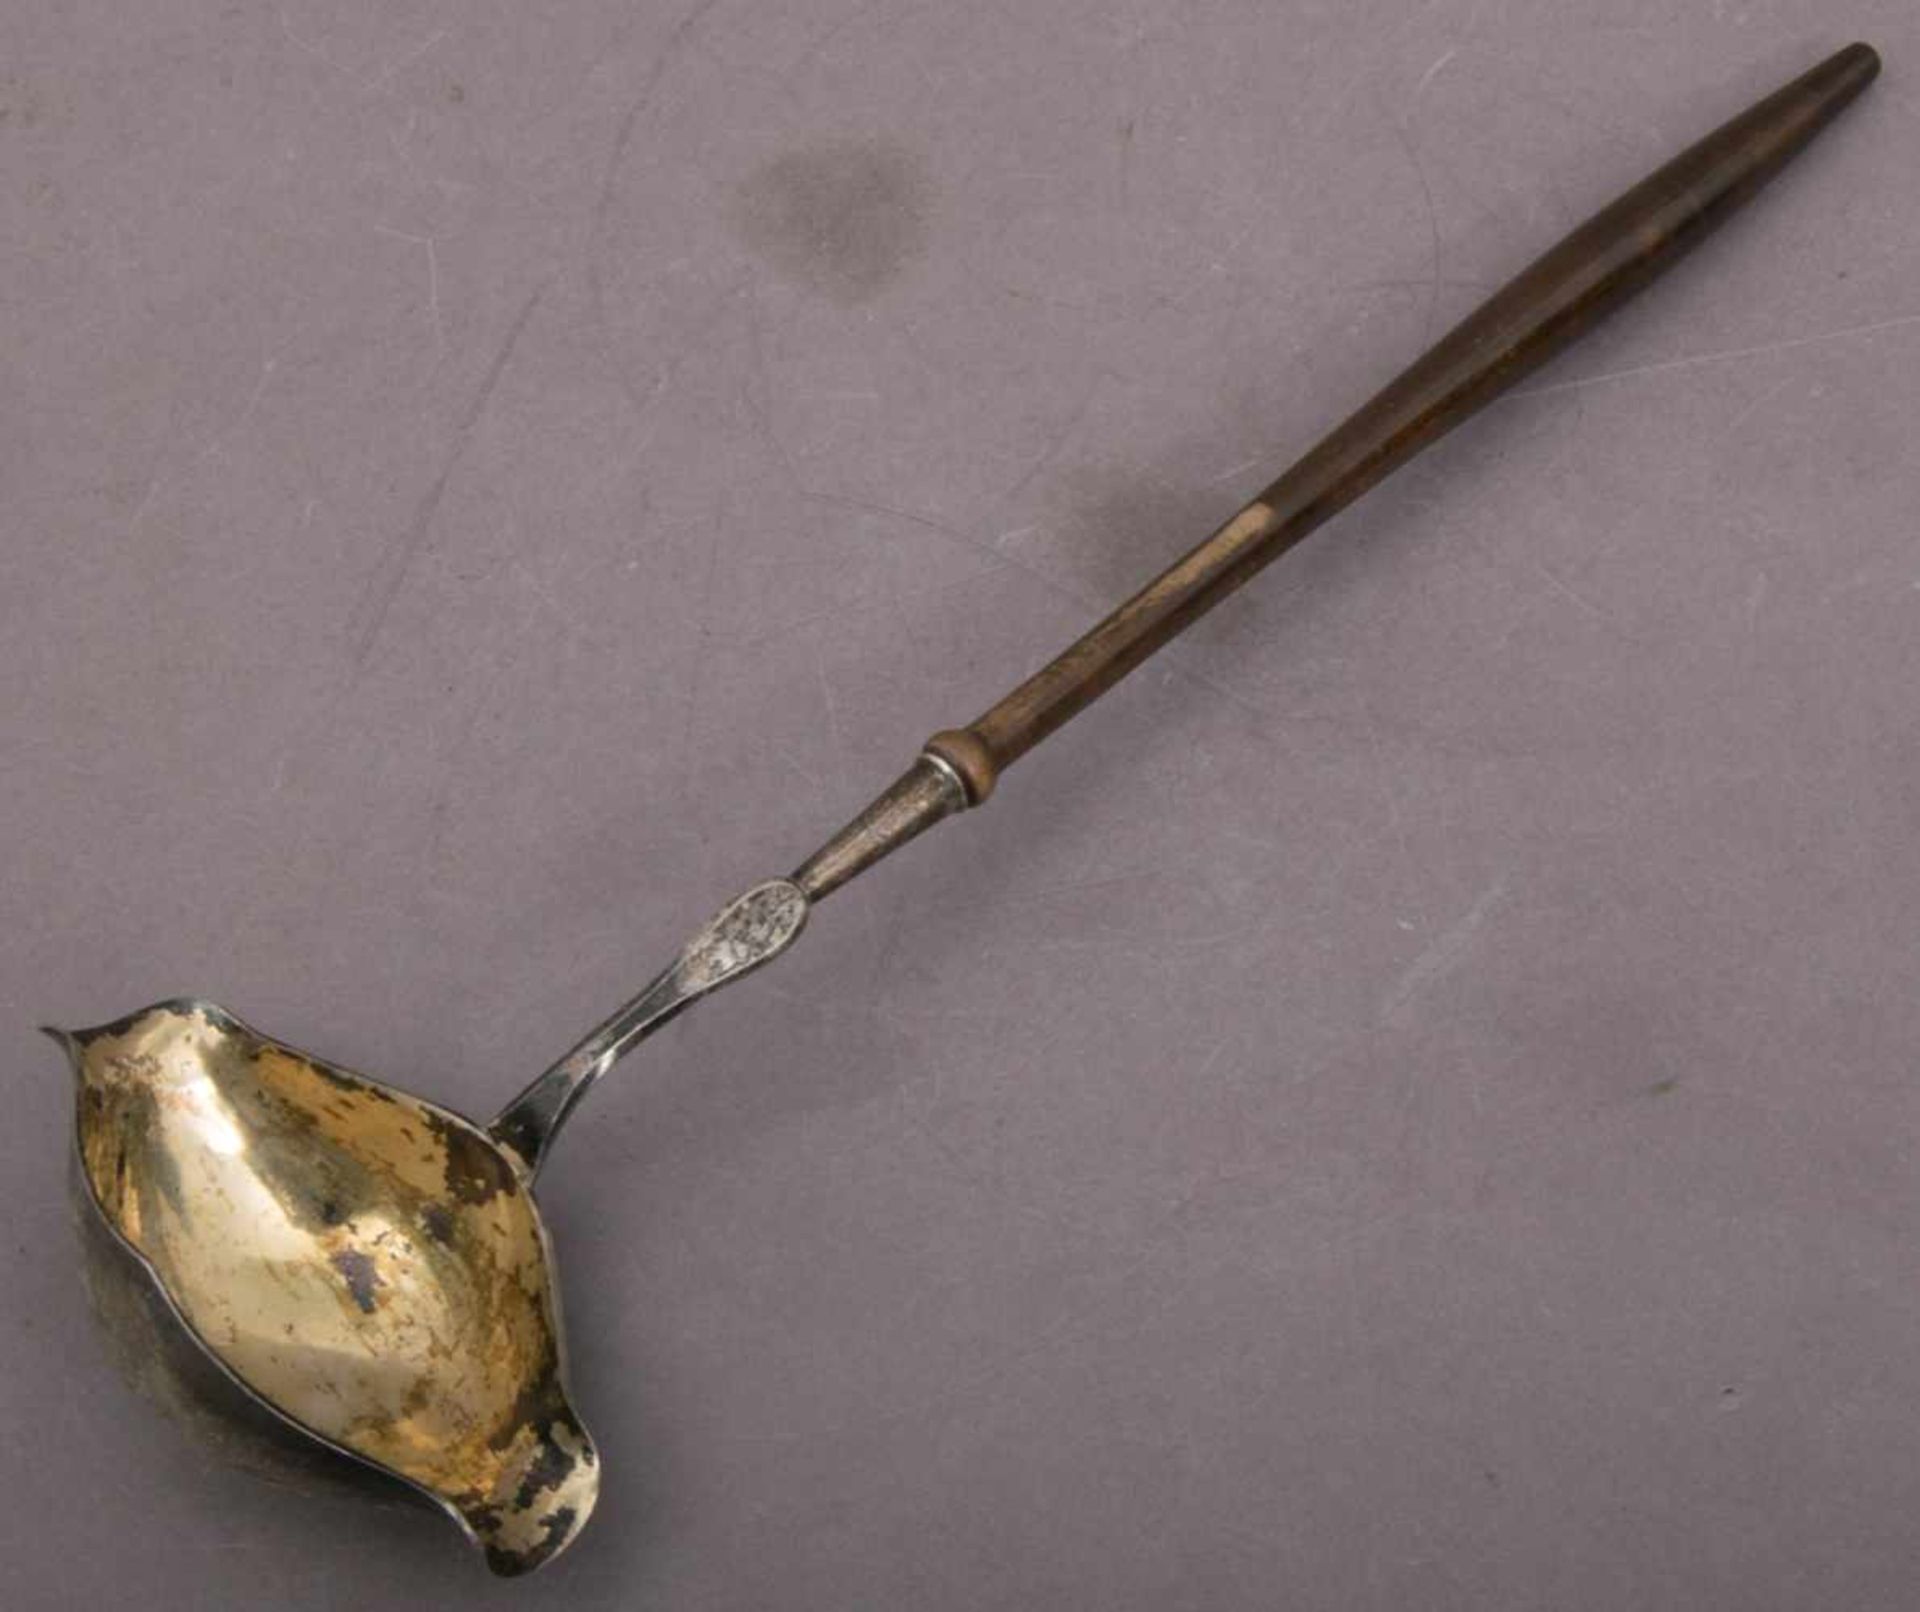 Antike Bowlen- oder Saucenkelle. Silber, teilweise vergoldet, Biedermeier um 1830. Griffstück in